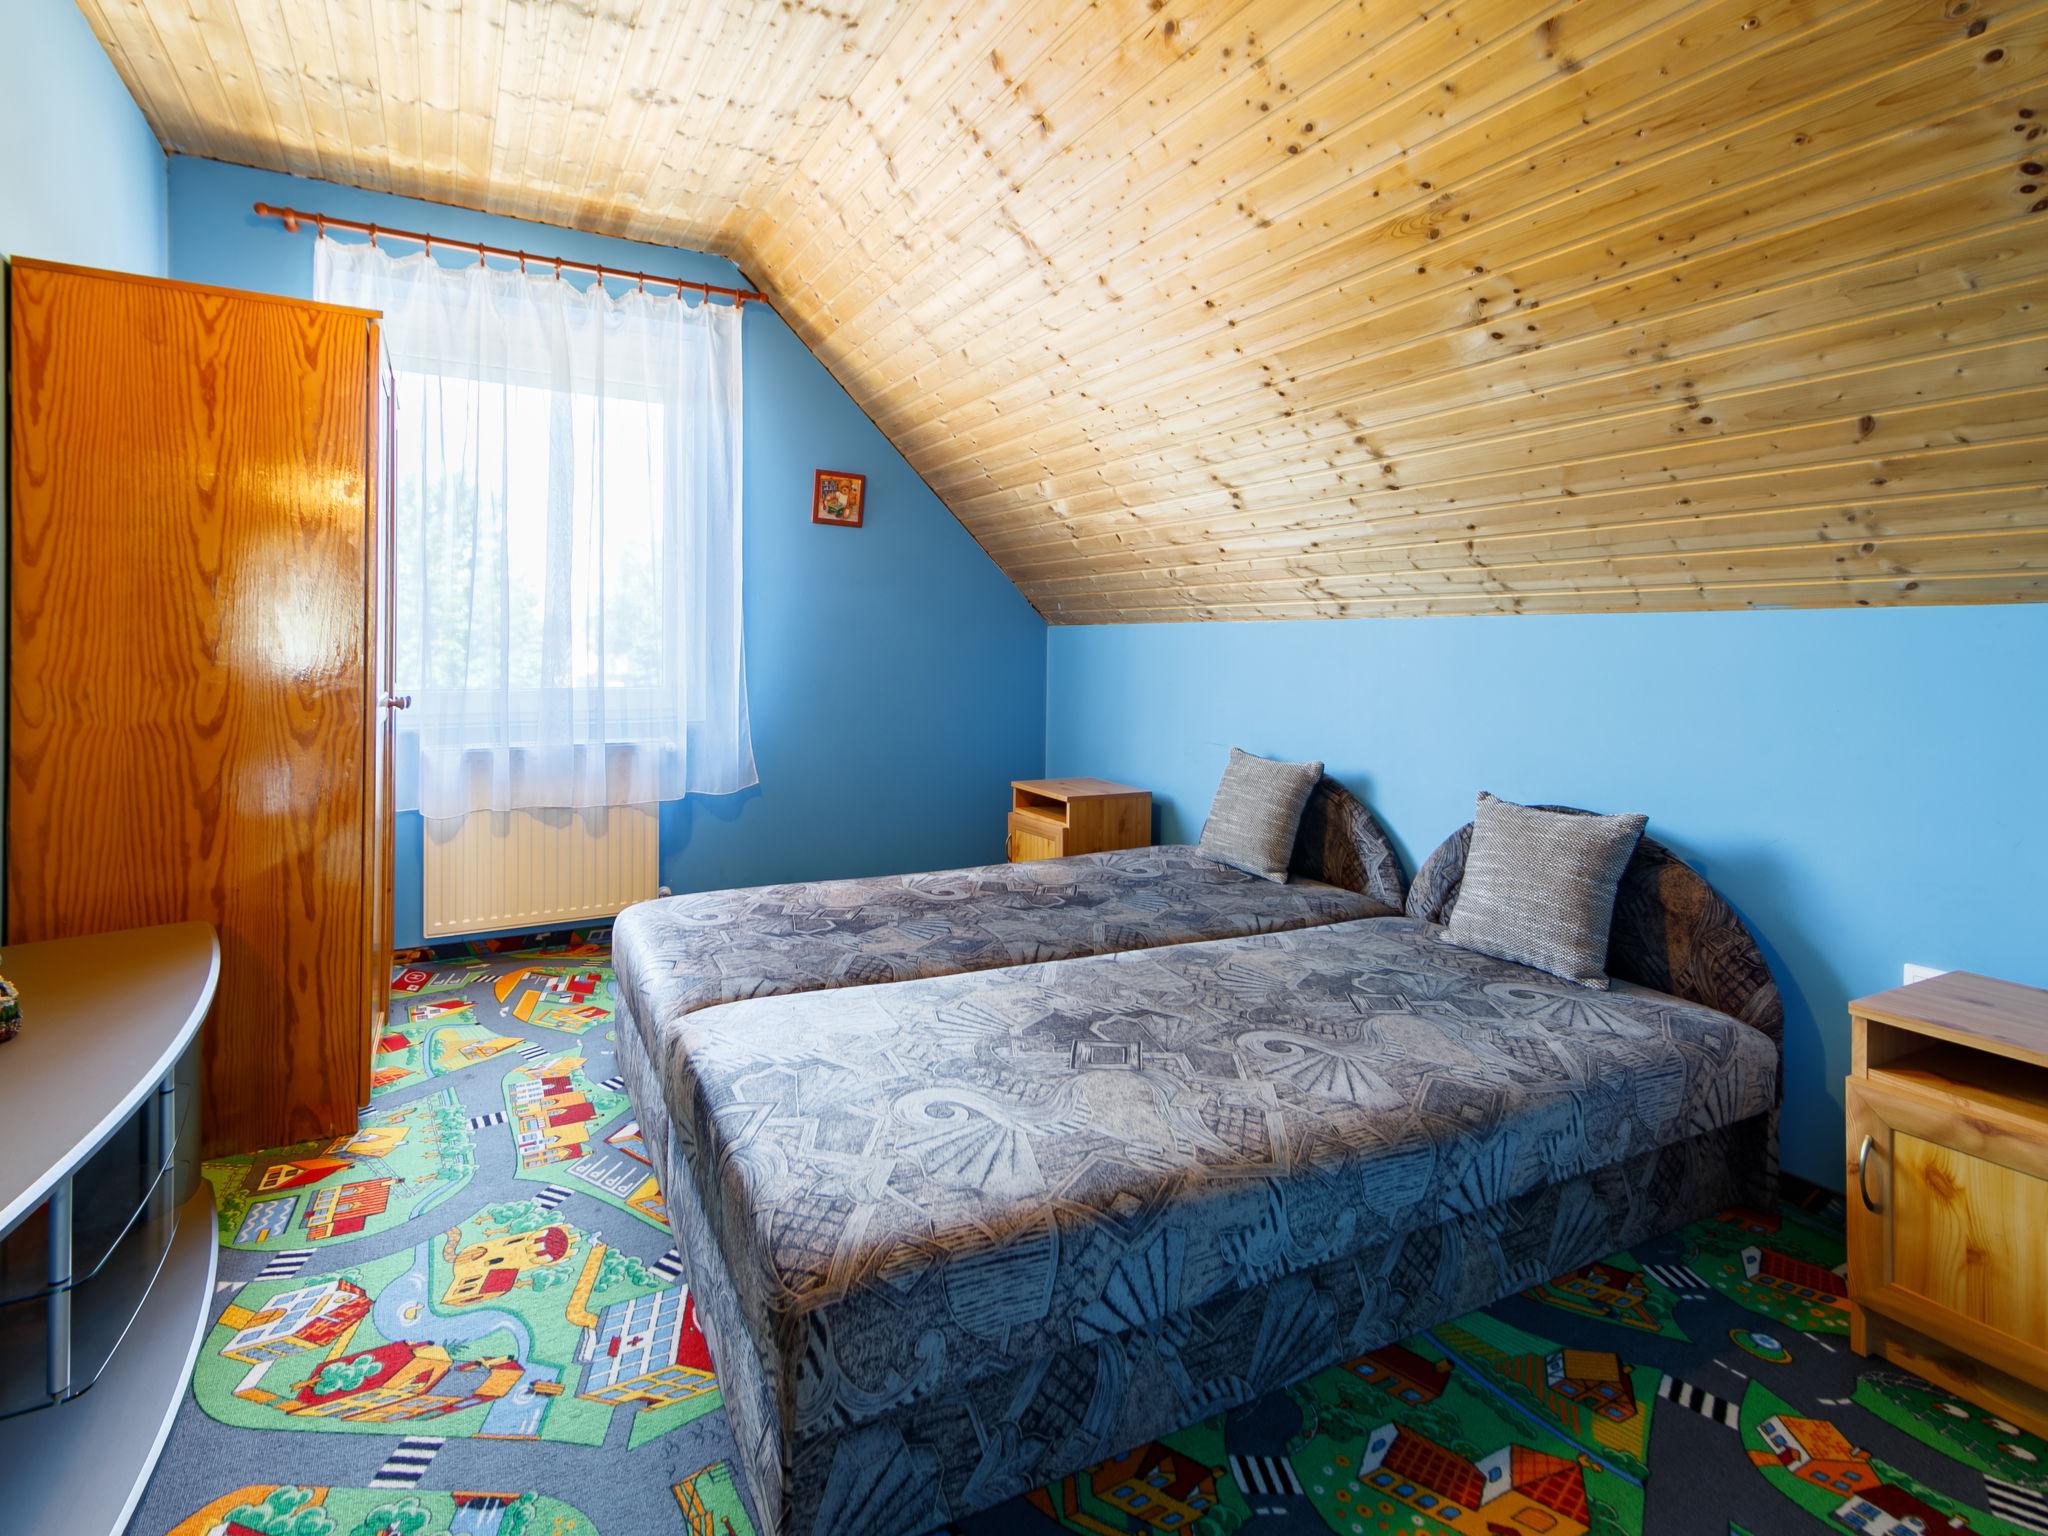 Foto 22 - Casa con 5 camere da letto a Balatonőszöd con giardino e vista sulle montagne